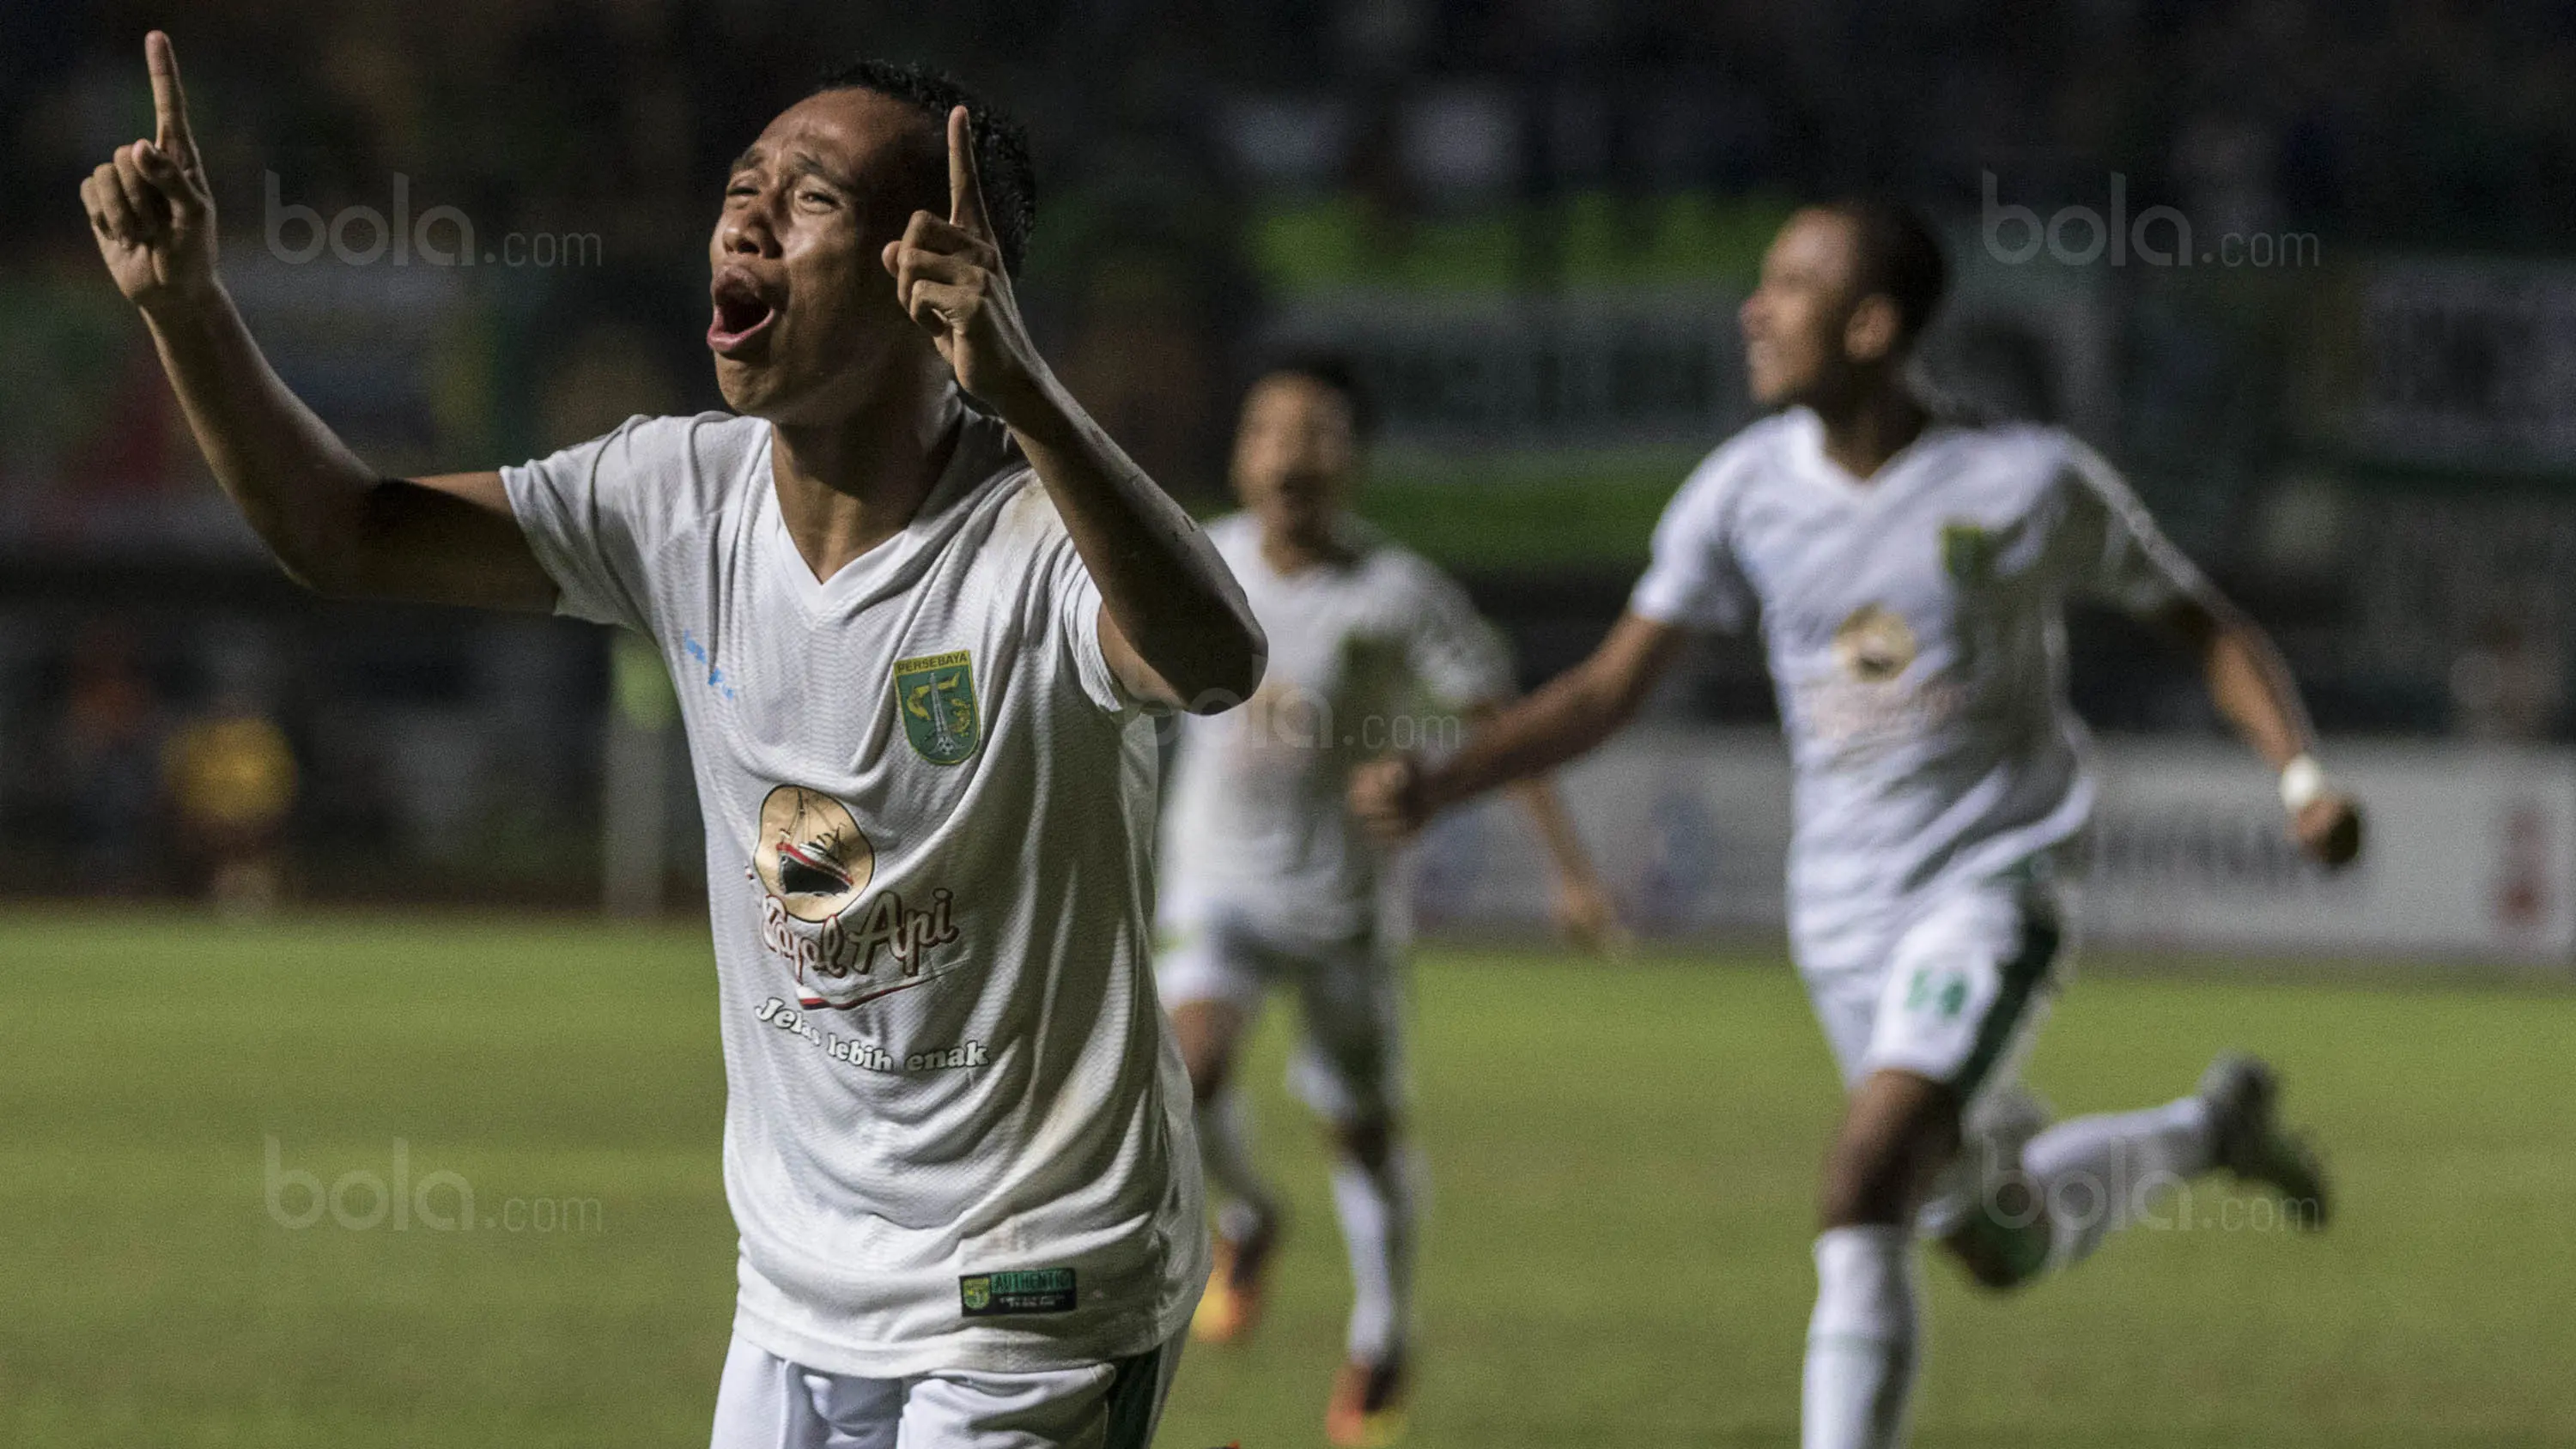 Bakatnya yang istimewa membuat Irfan Jaya terpilih untuk mengikuti PSM Makassar U-21 pada ajang Indonesia Soccer Championship U-21 2016. (Bola.com/Vitalis Yogi Trisna)